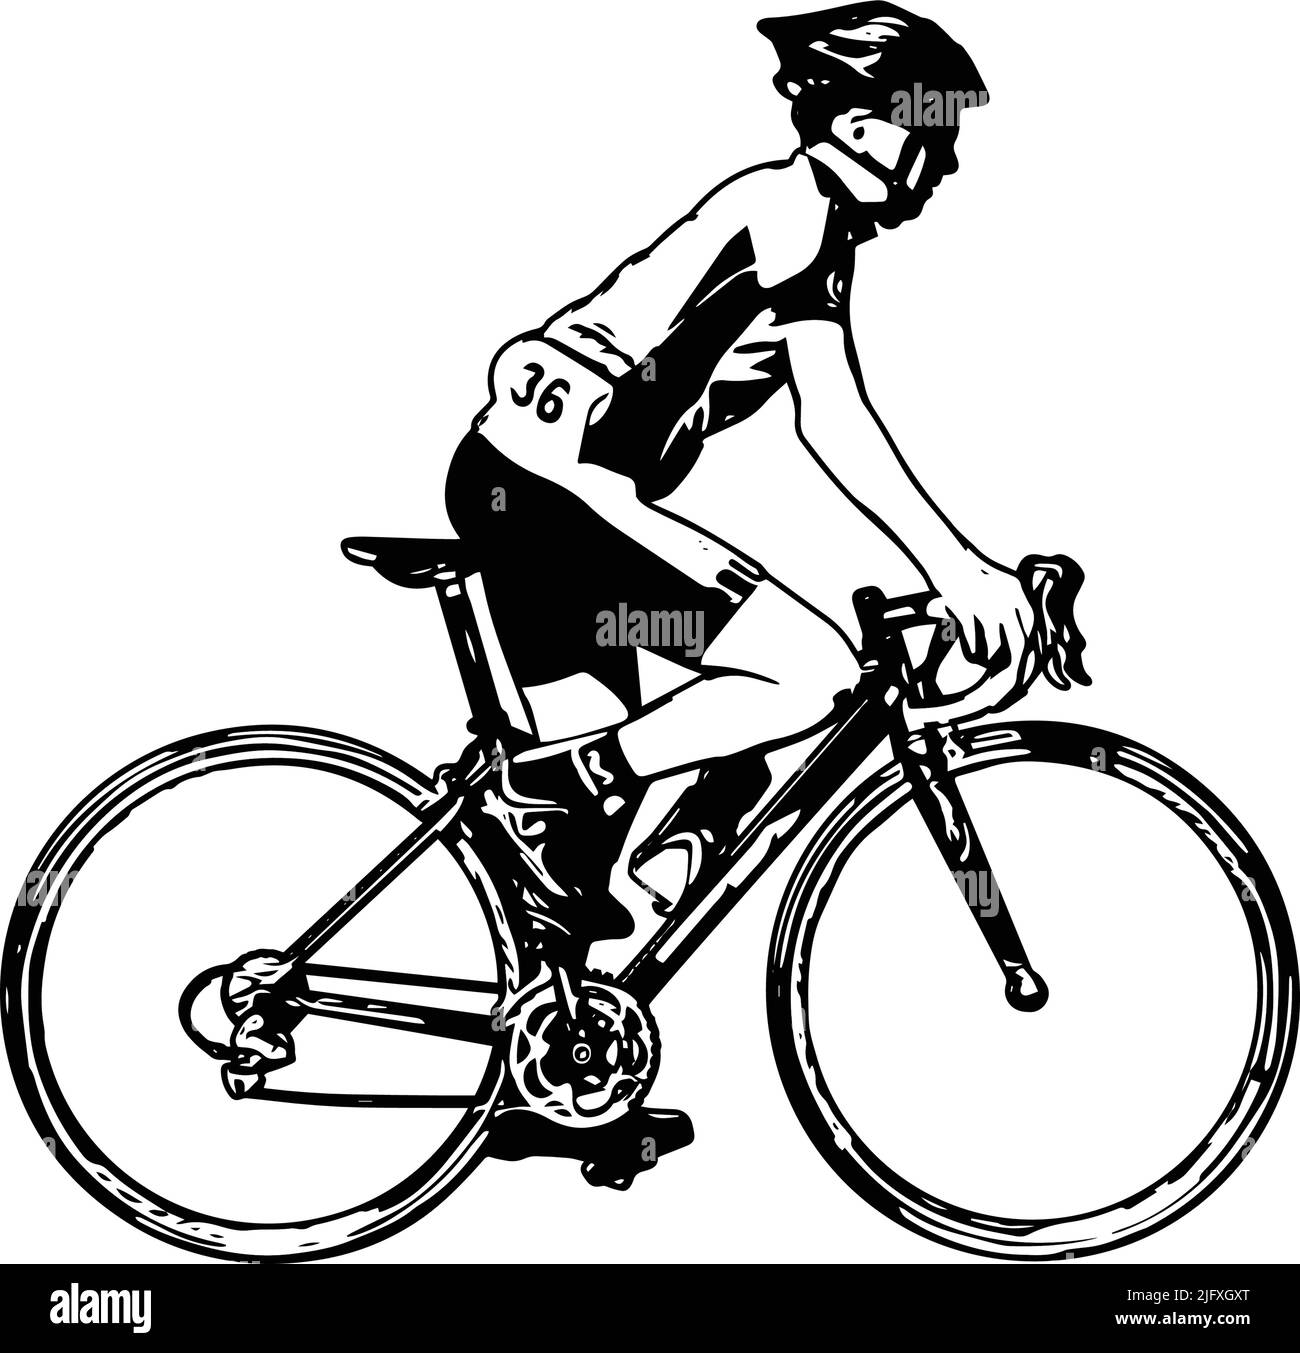 bicyclist sketch illustration - vector Stock Vector